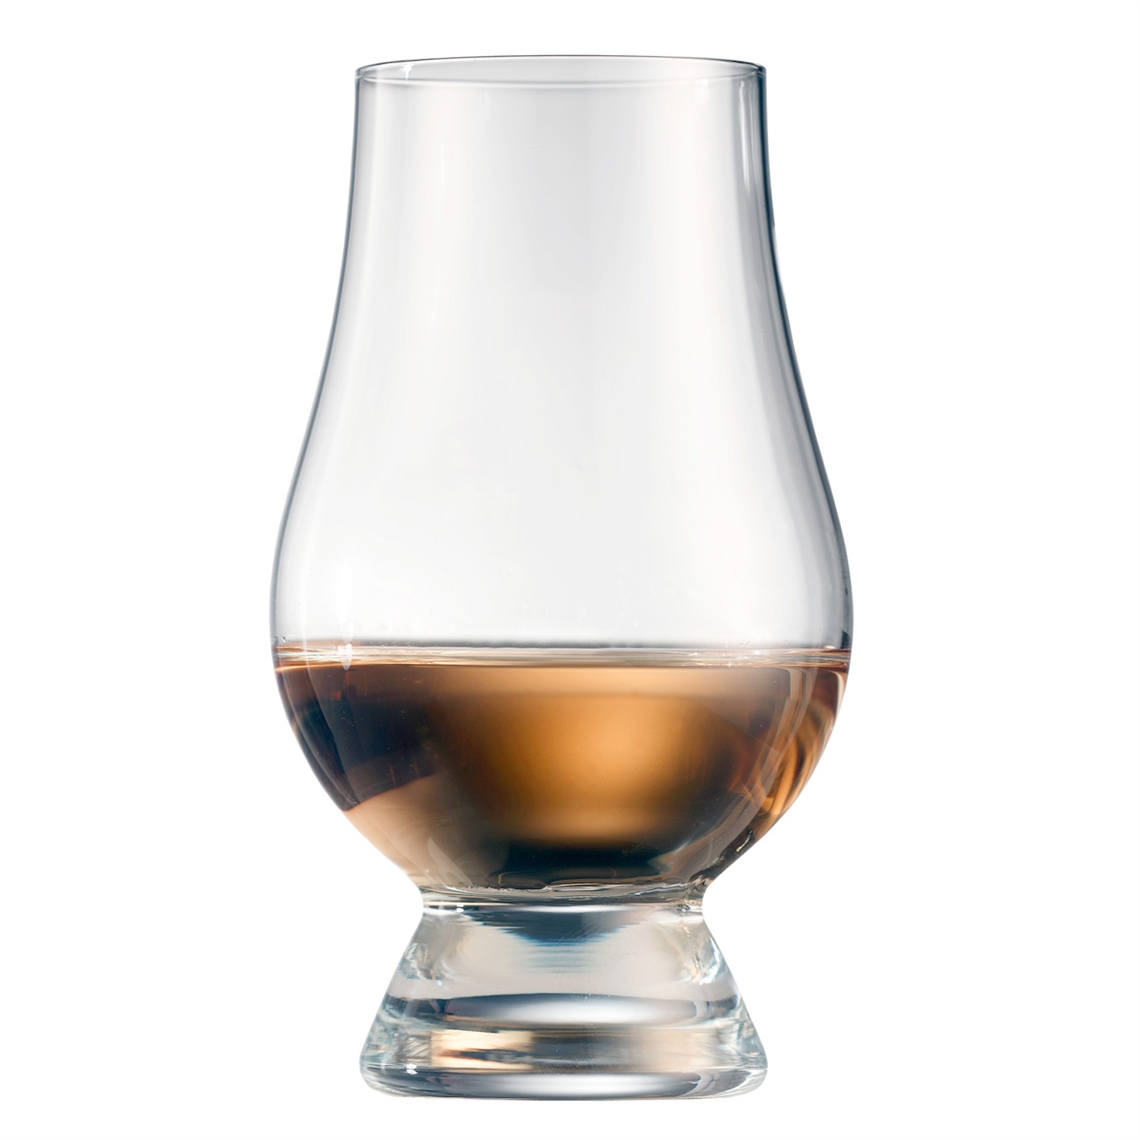 View more spirit glasses from our Whisky Glasses range